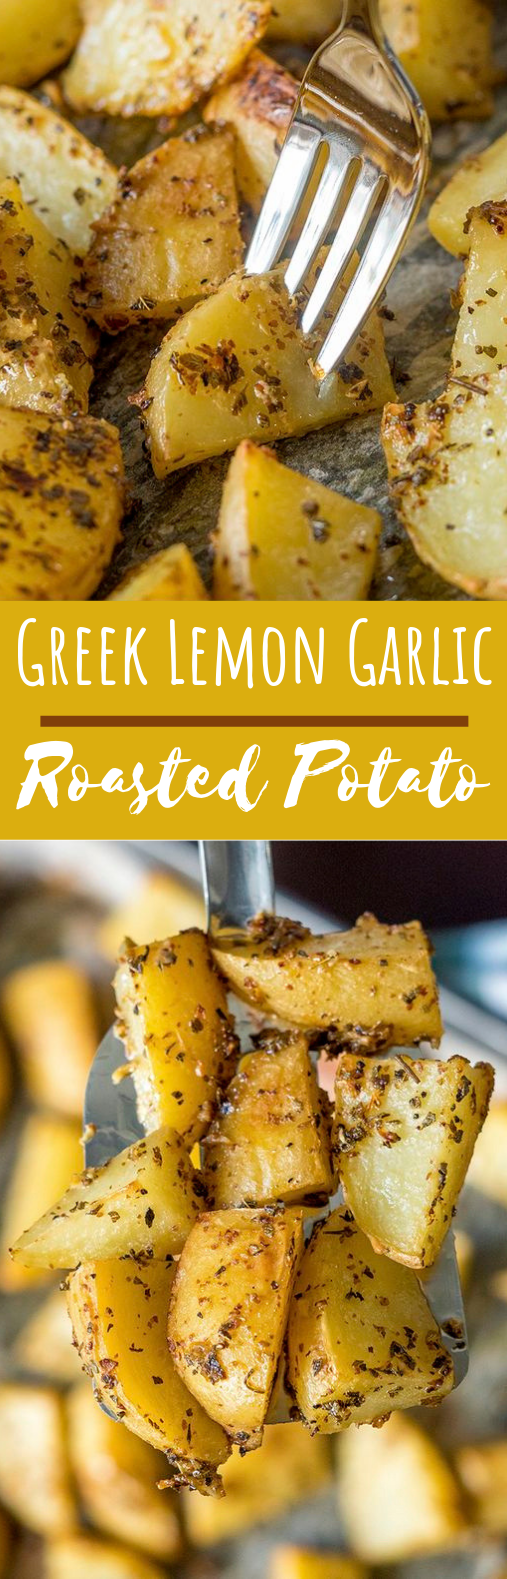 Greek Lemon Garlic Roasted Potatoes #vegetarian #vegan